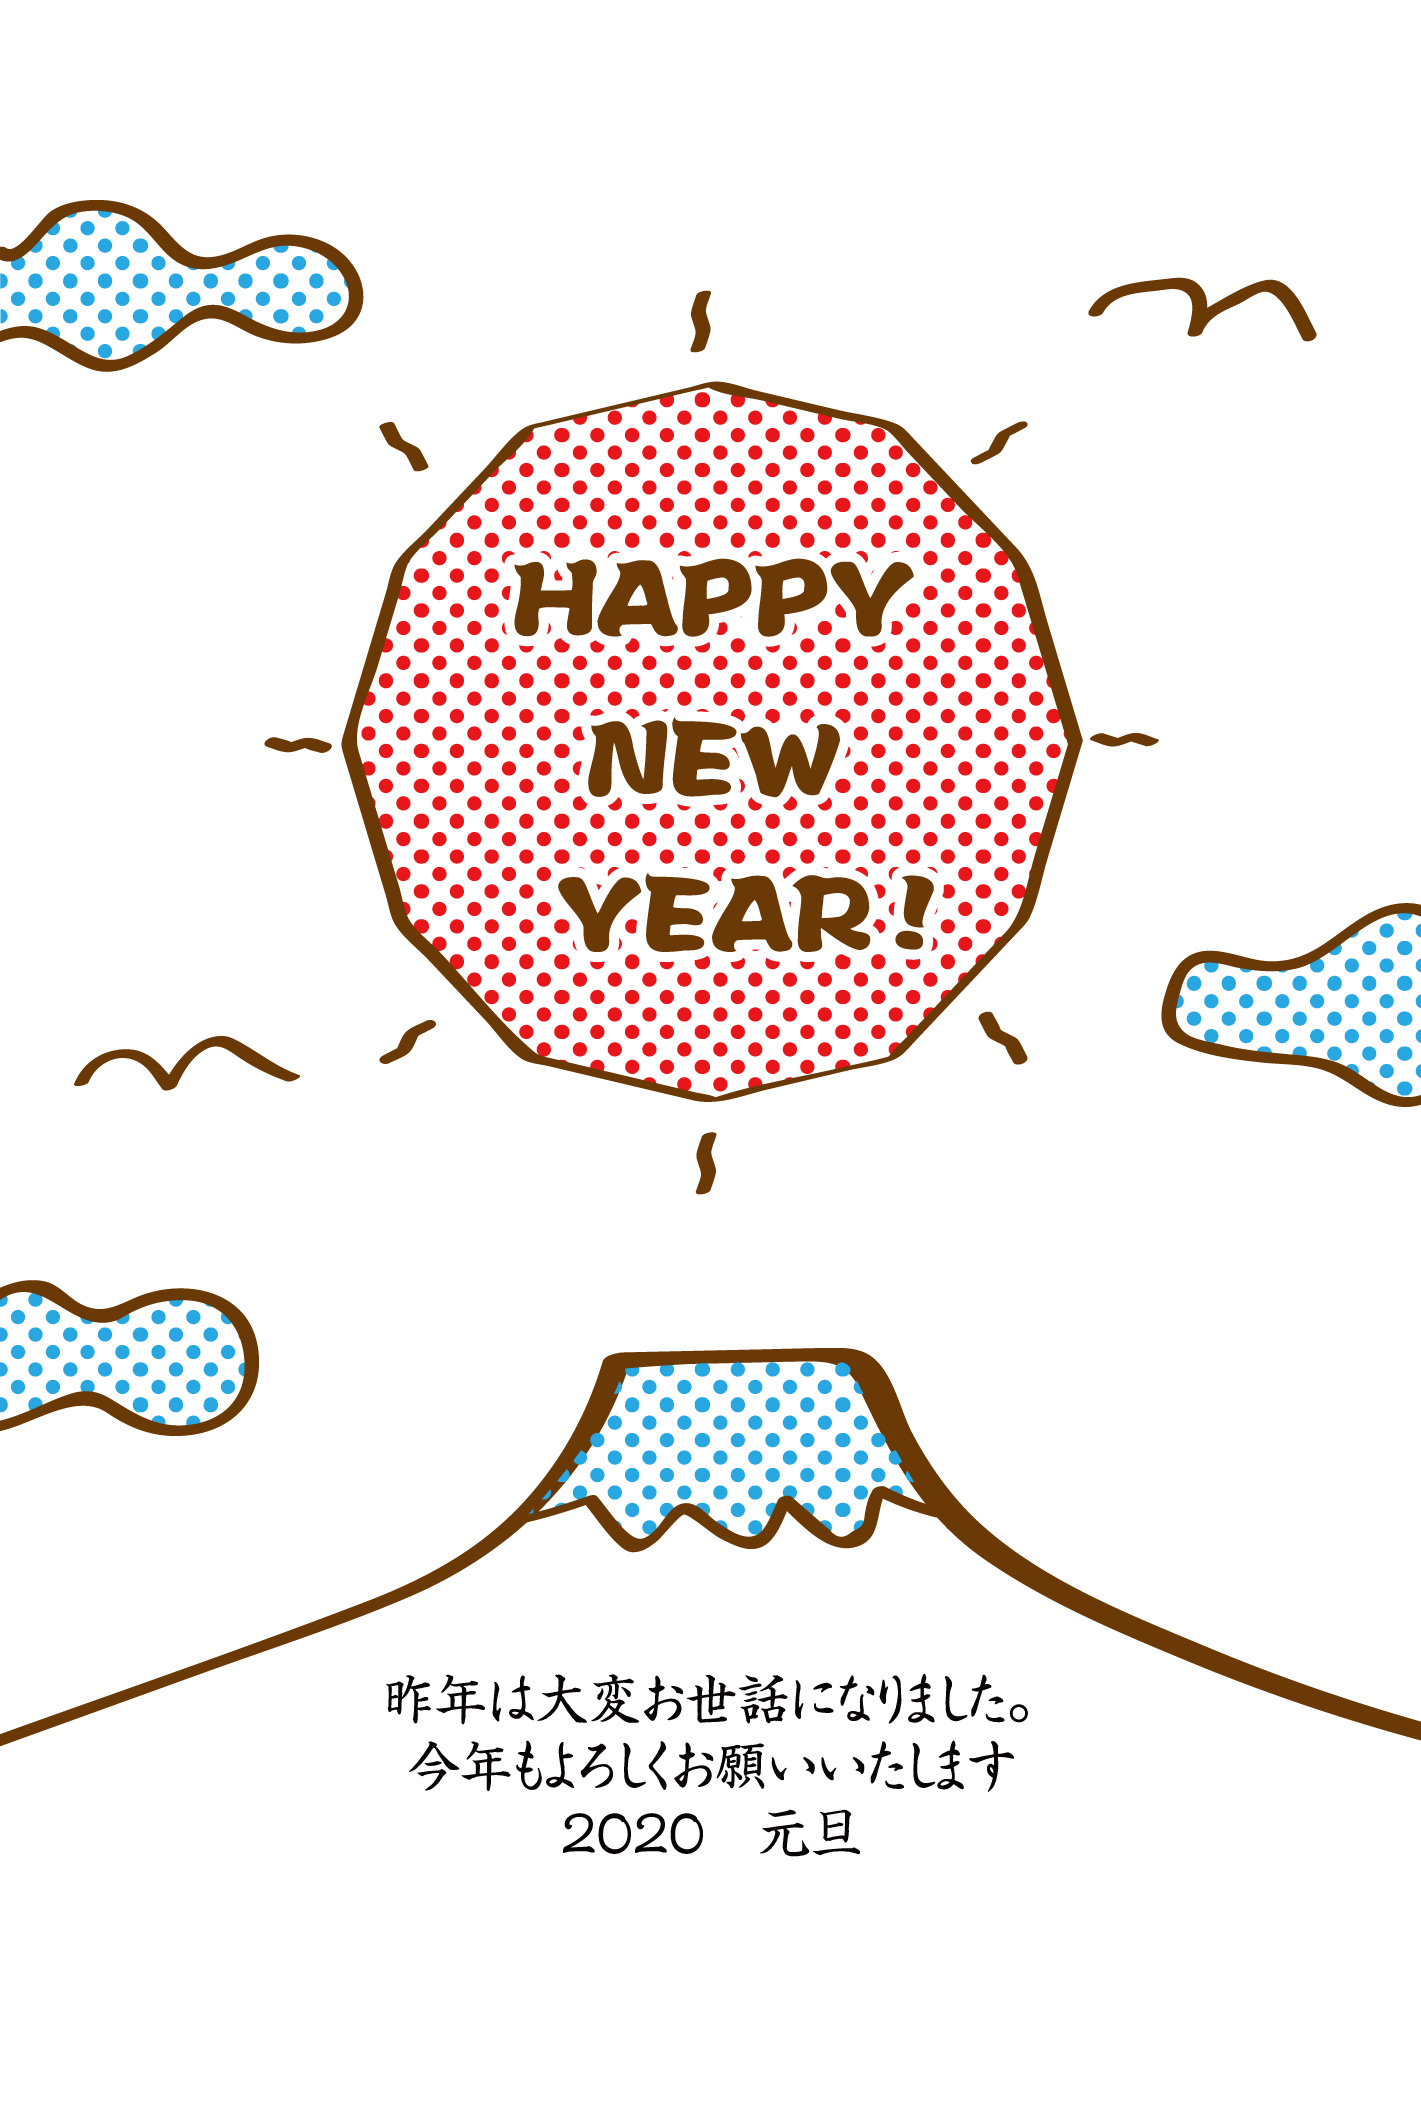 「HAPPY NEW YEAR」富士山と初日の出のゆるかわ年賀状イラスト素材です